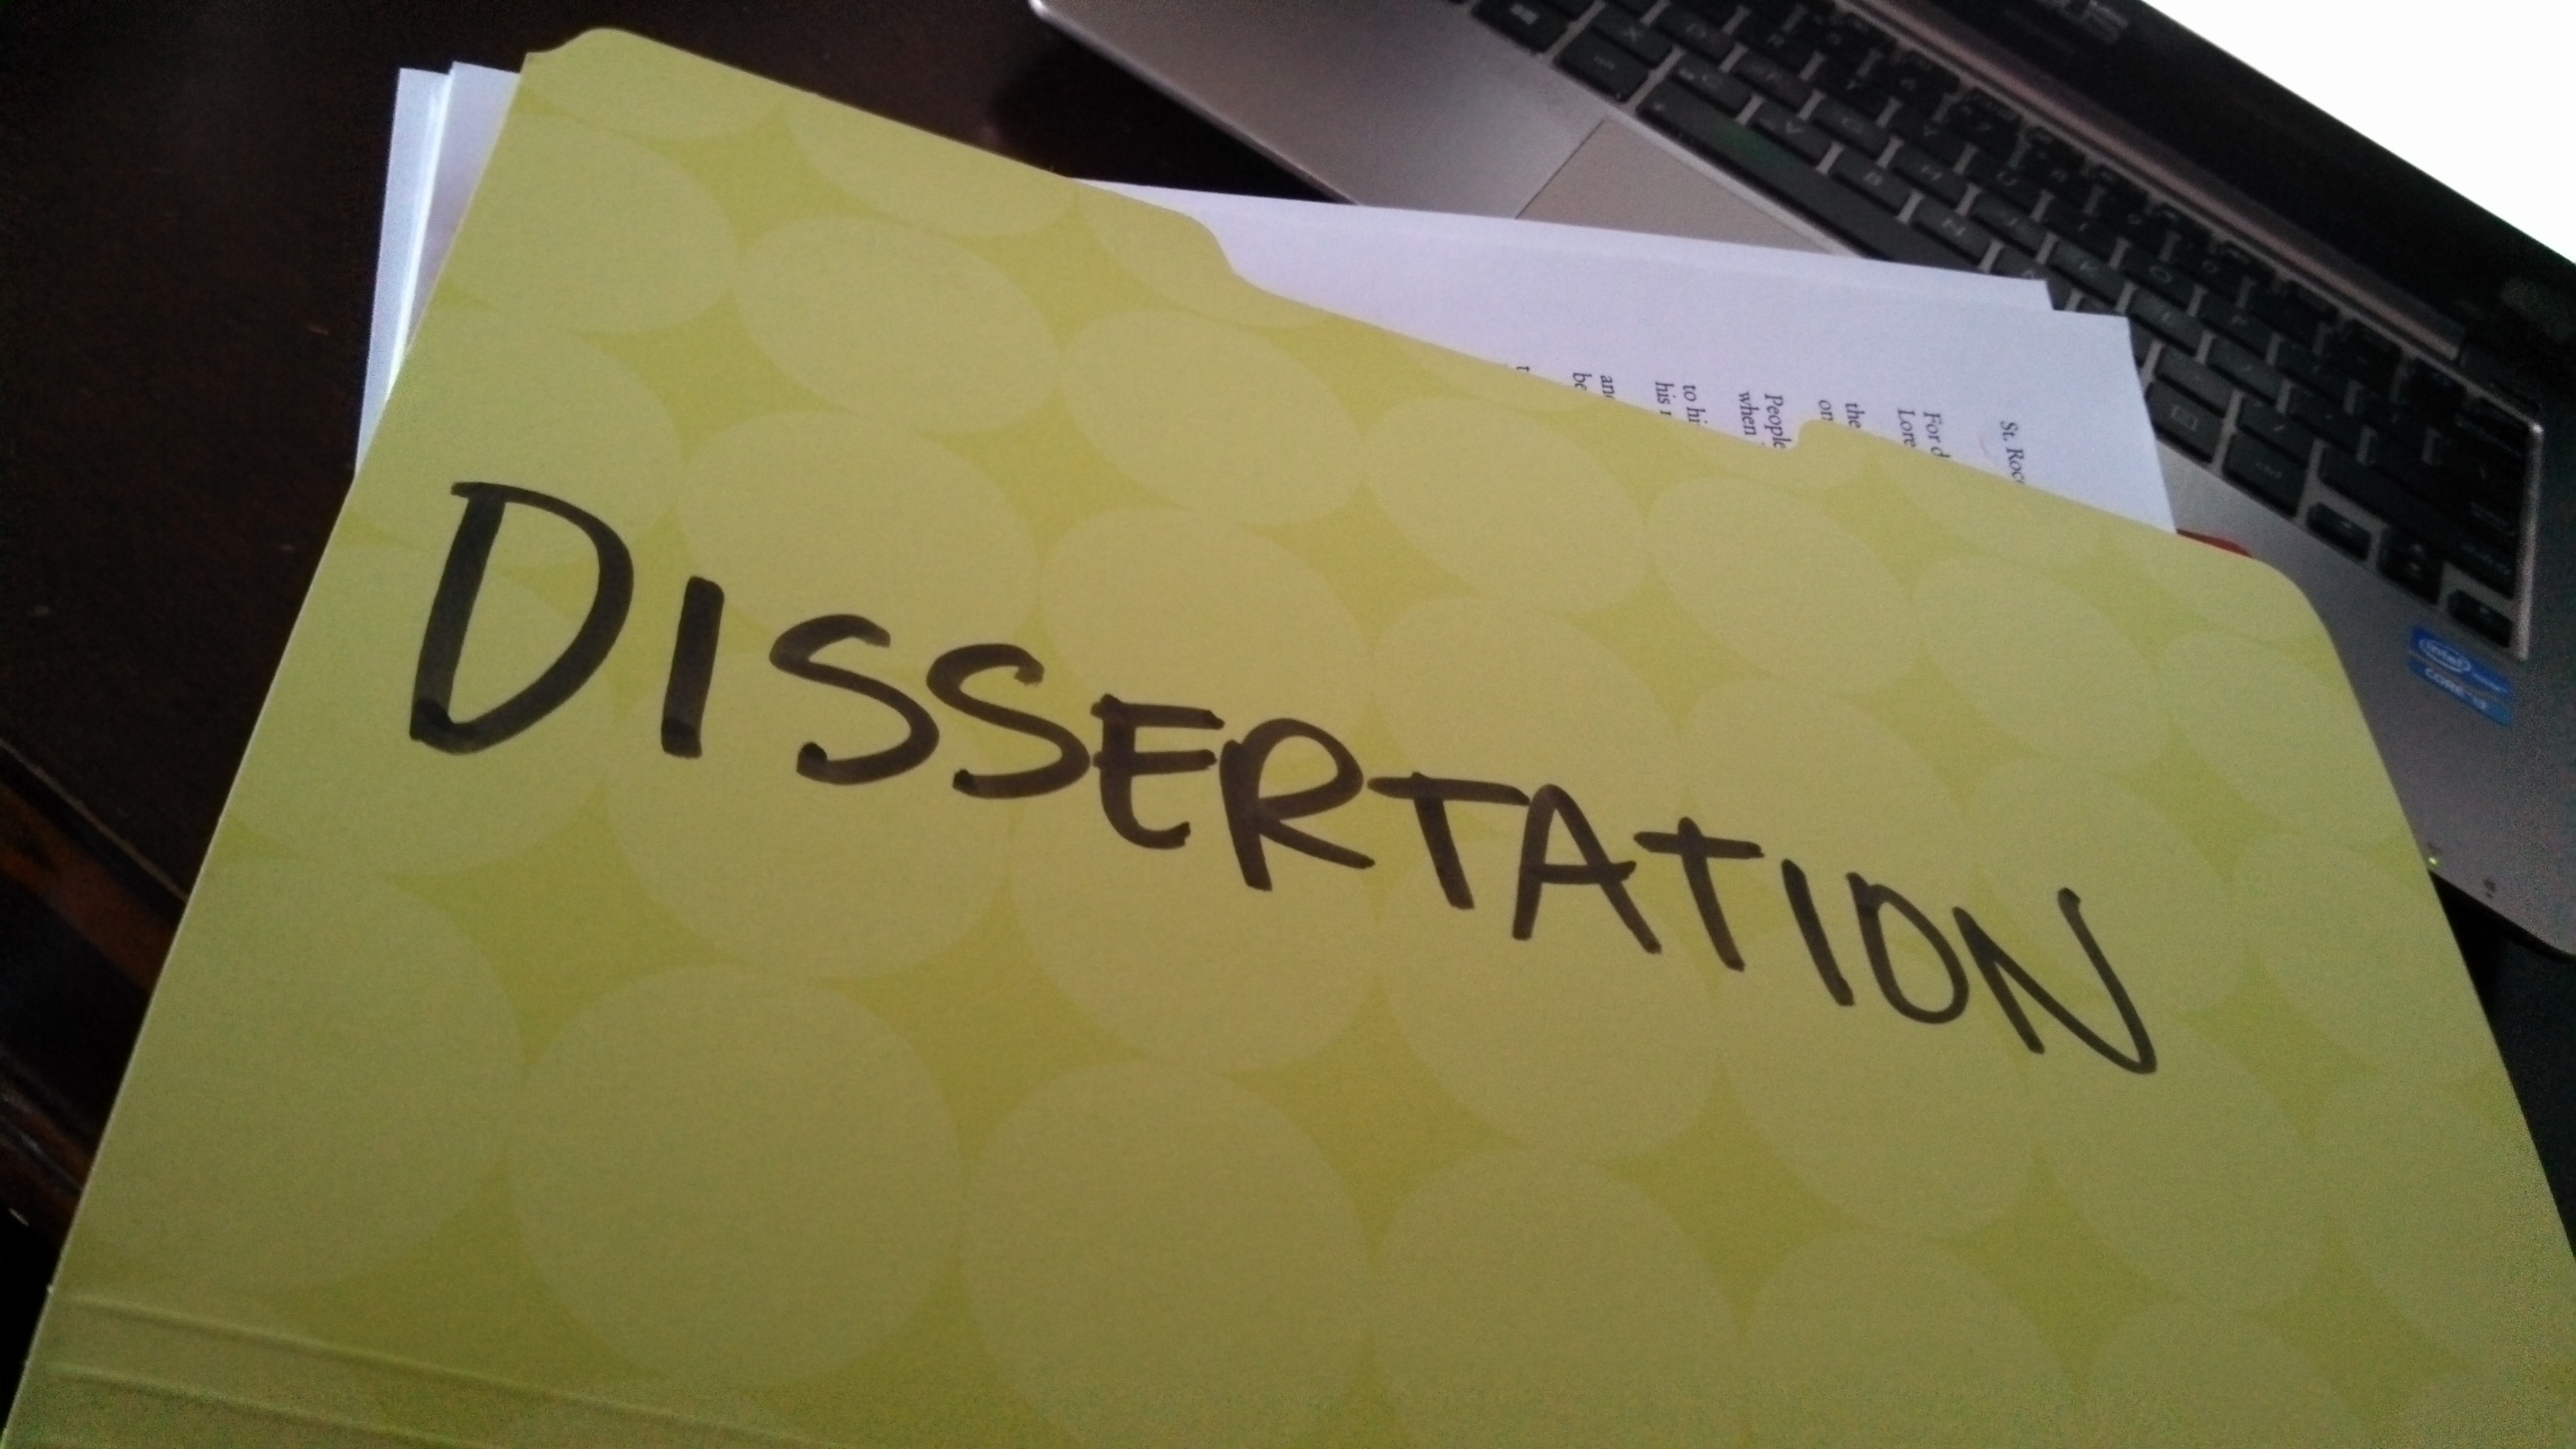 Dissertation planning strategic